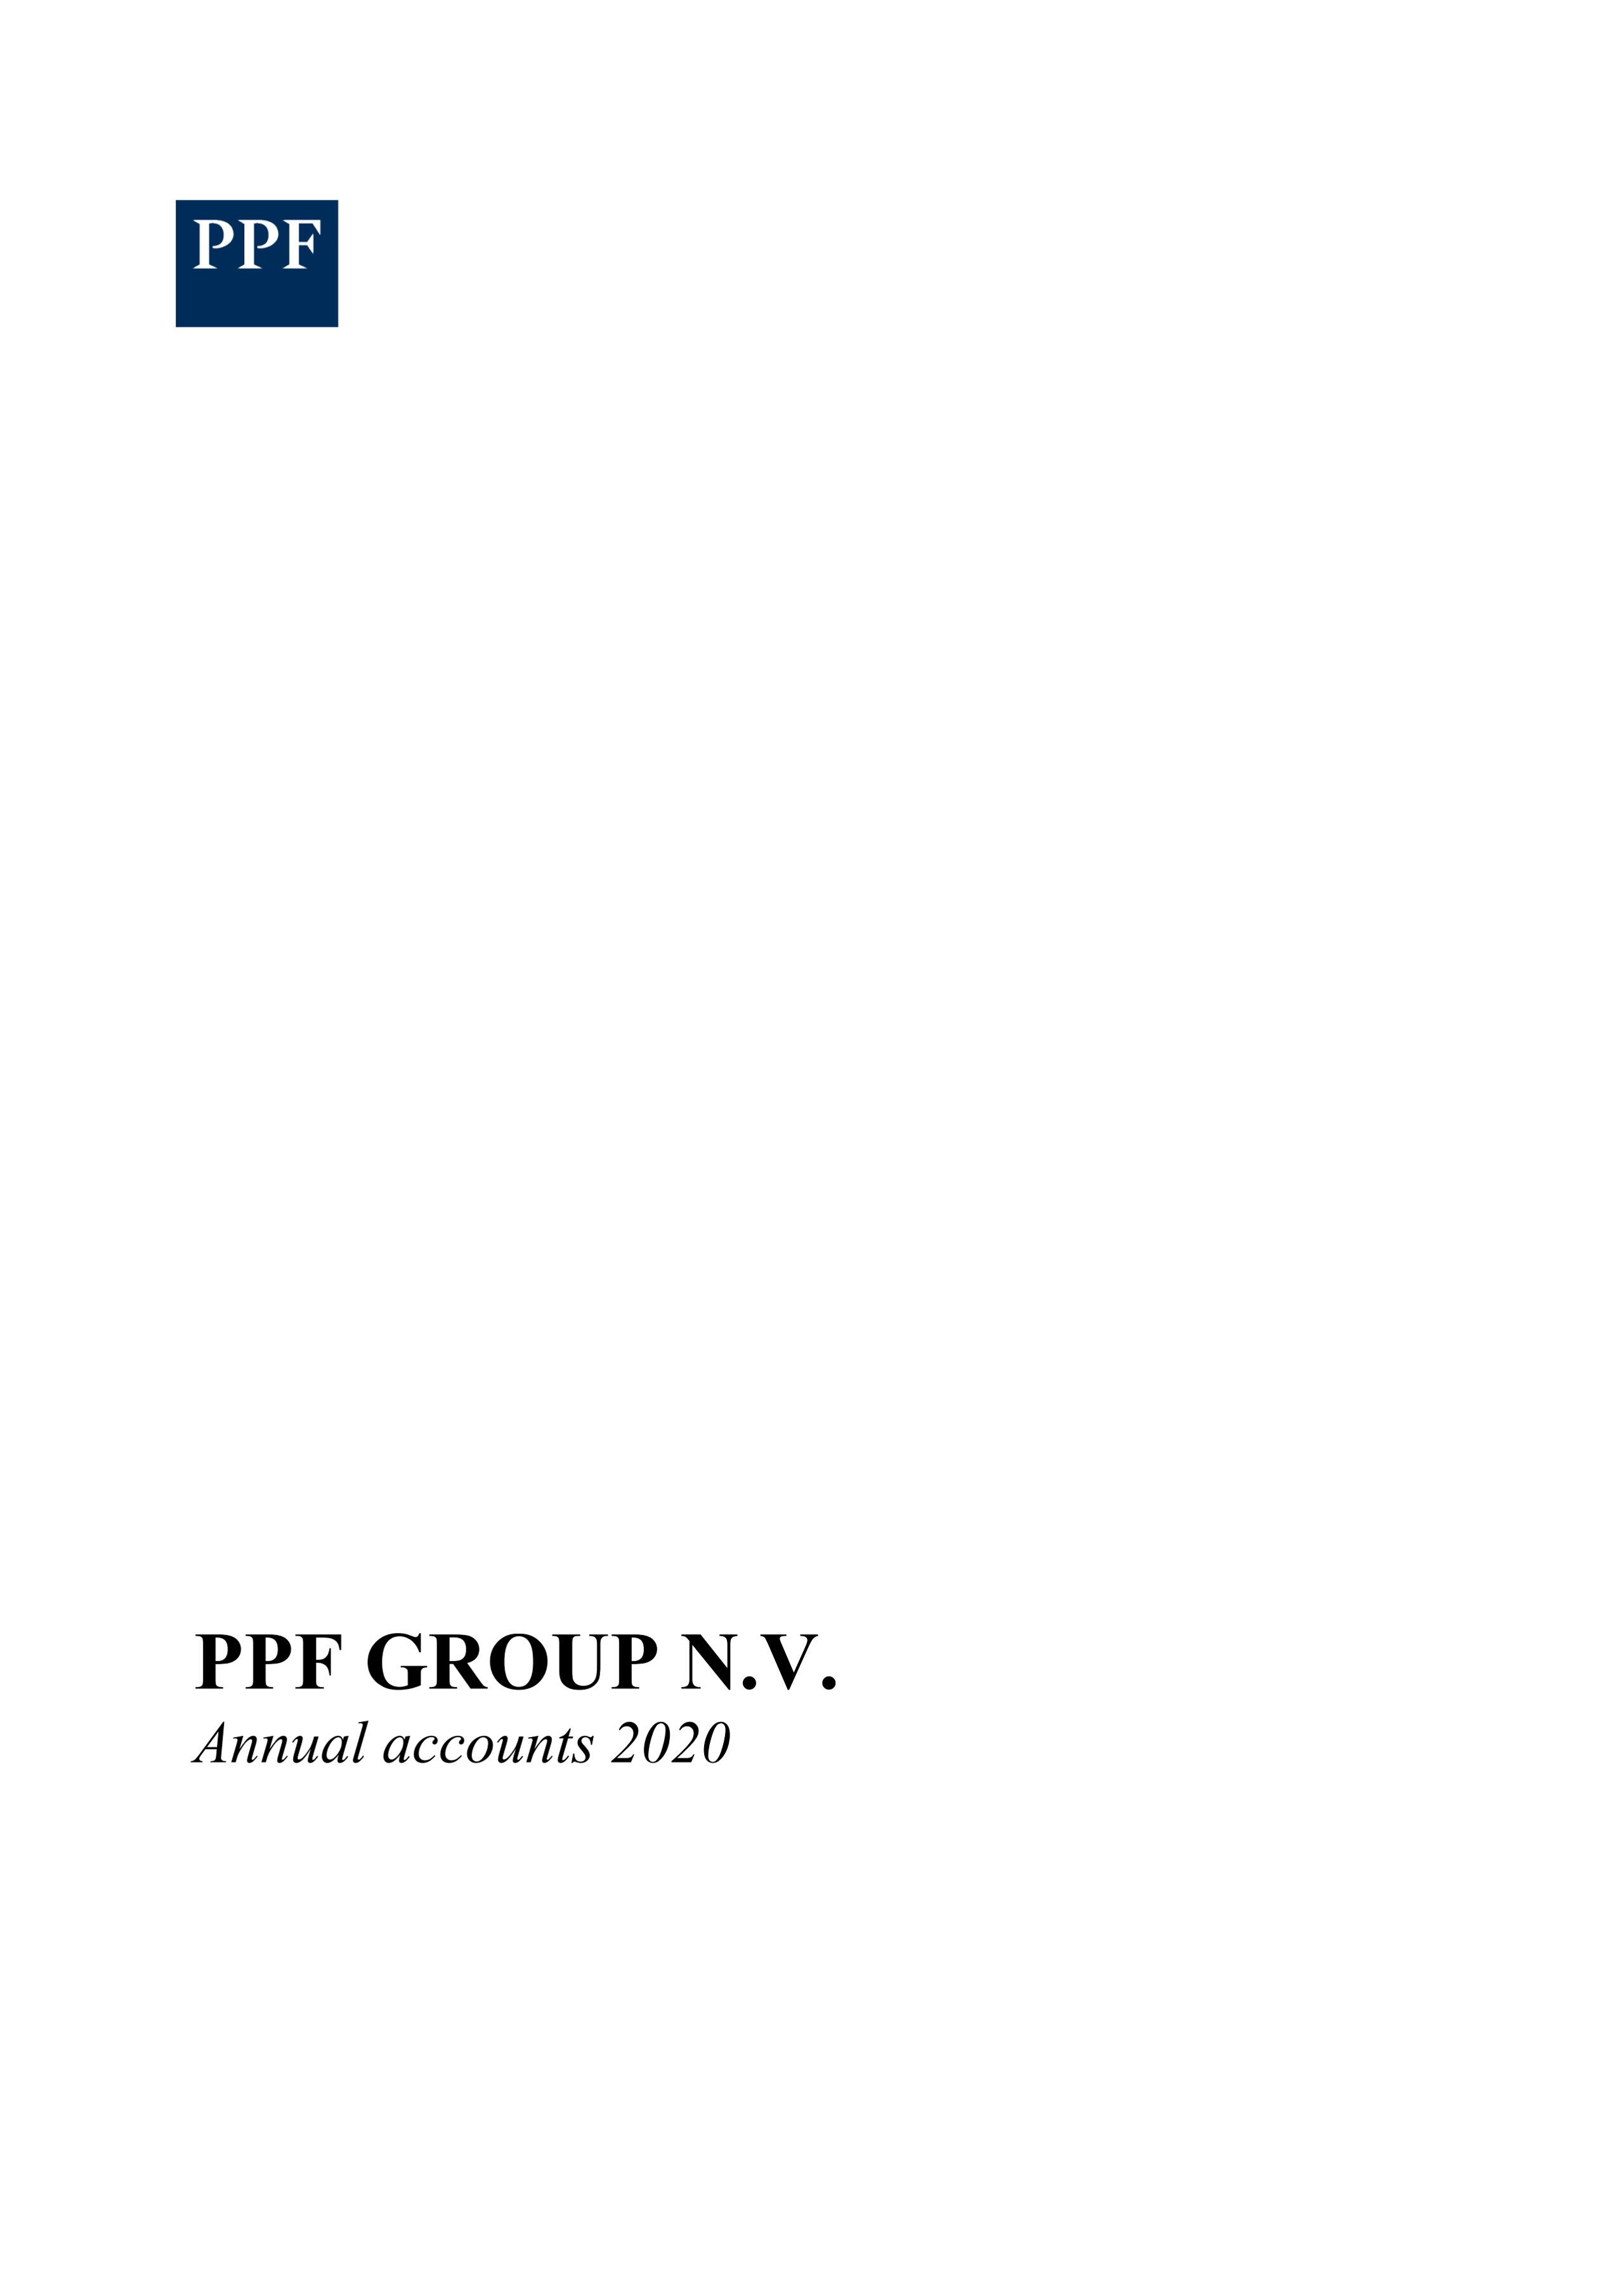 PPF Group N.V. Annual Accounts 2020 (20/5/2021)